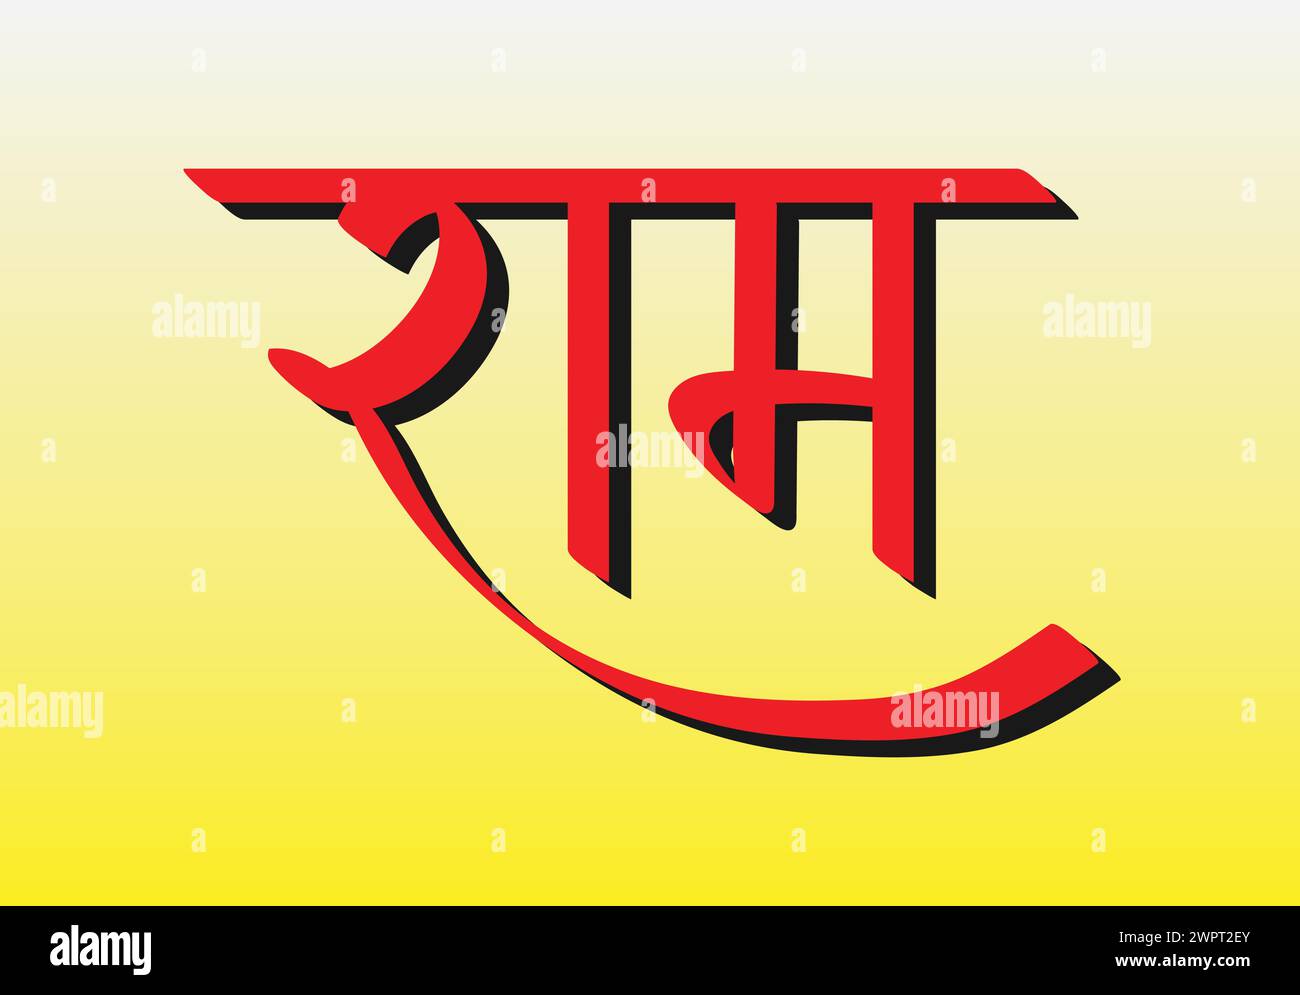 RAM Ram en hindi, louant seigneur Ram, calligraphie hindi, typographie, salutation hindoue, JAI Shree Ram Illustration de Vecteur